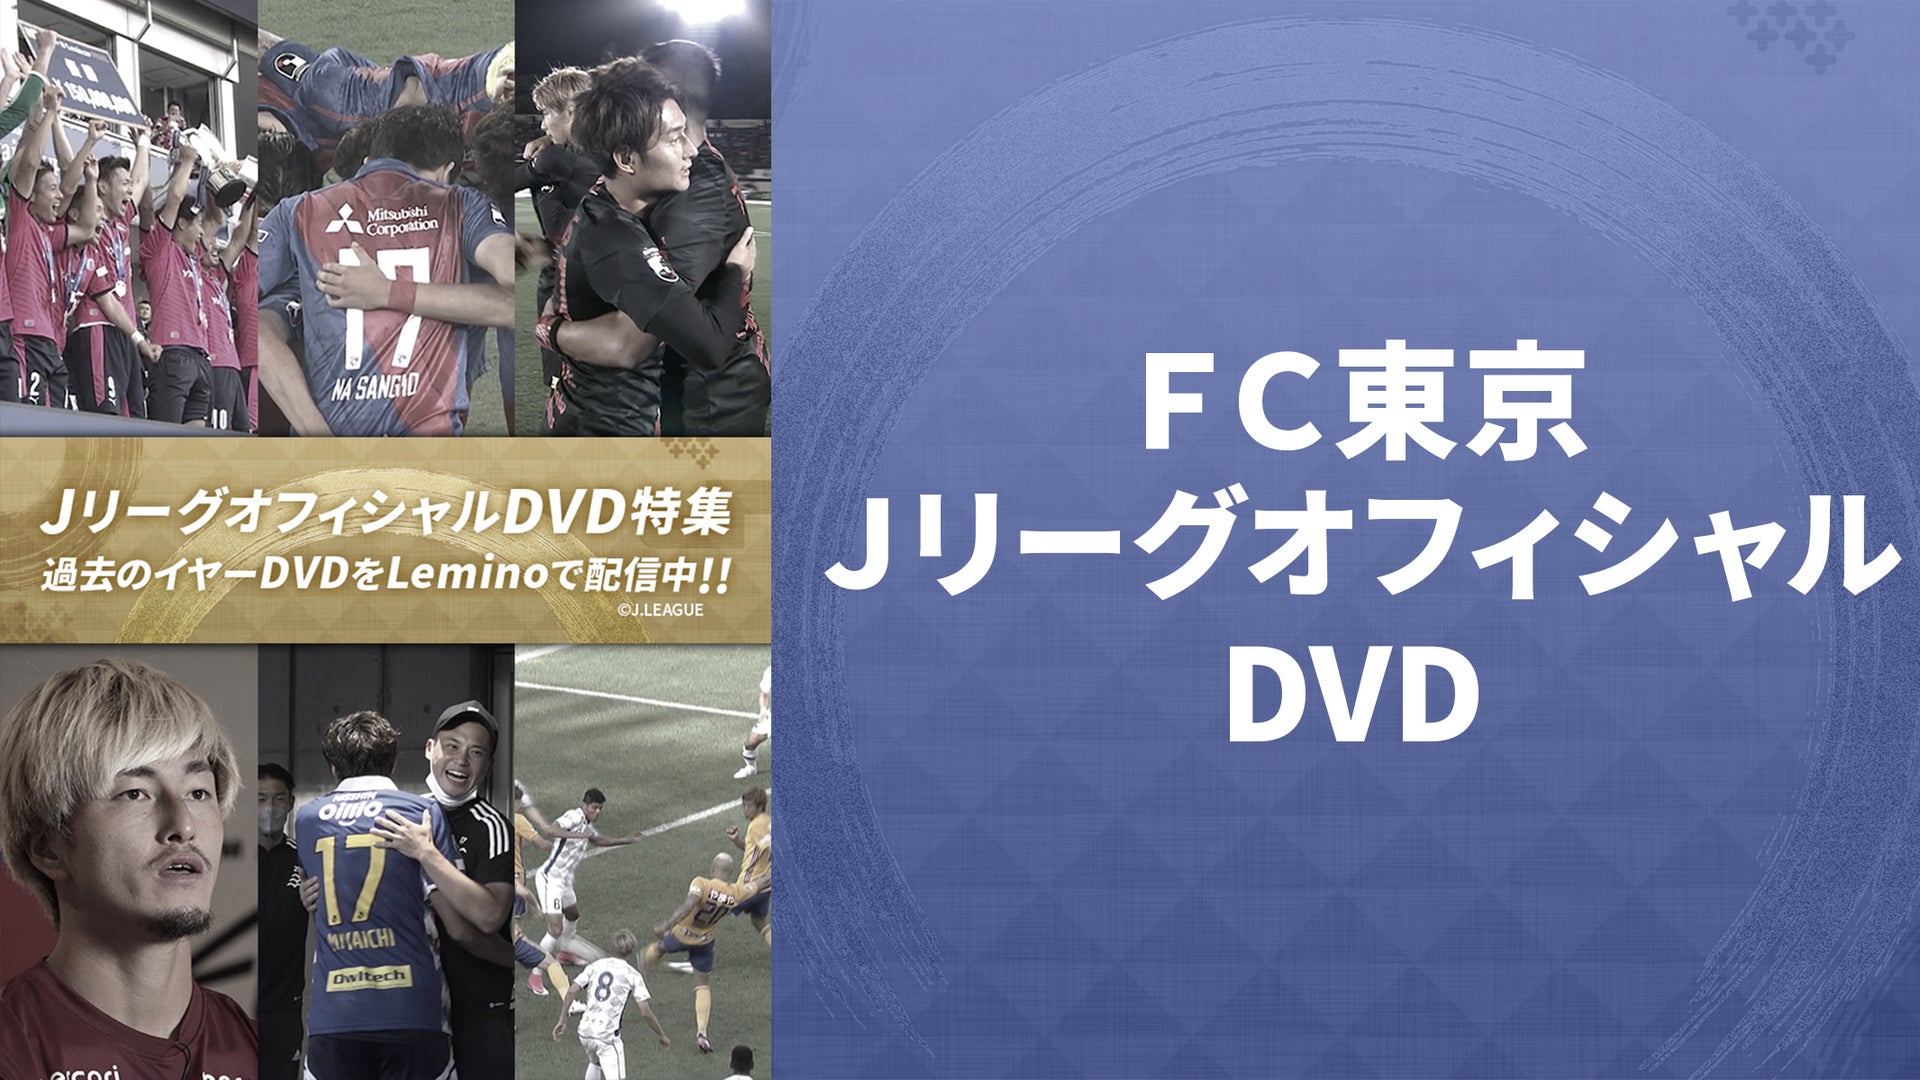 FC東京JリーグオフィシャルDVD | Lemino（レミノ）／ドコモの新しい映像サービス - 知らなかった、大好きへ。